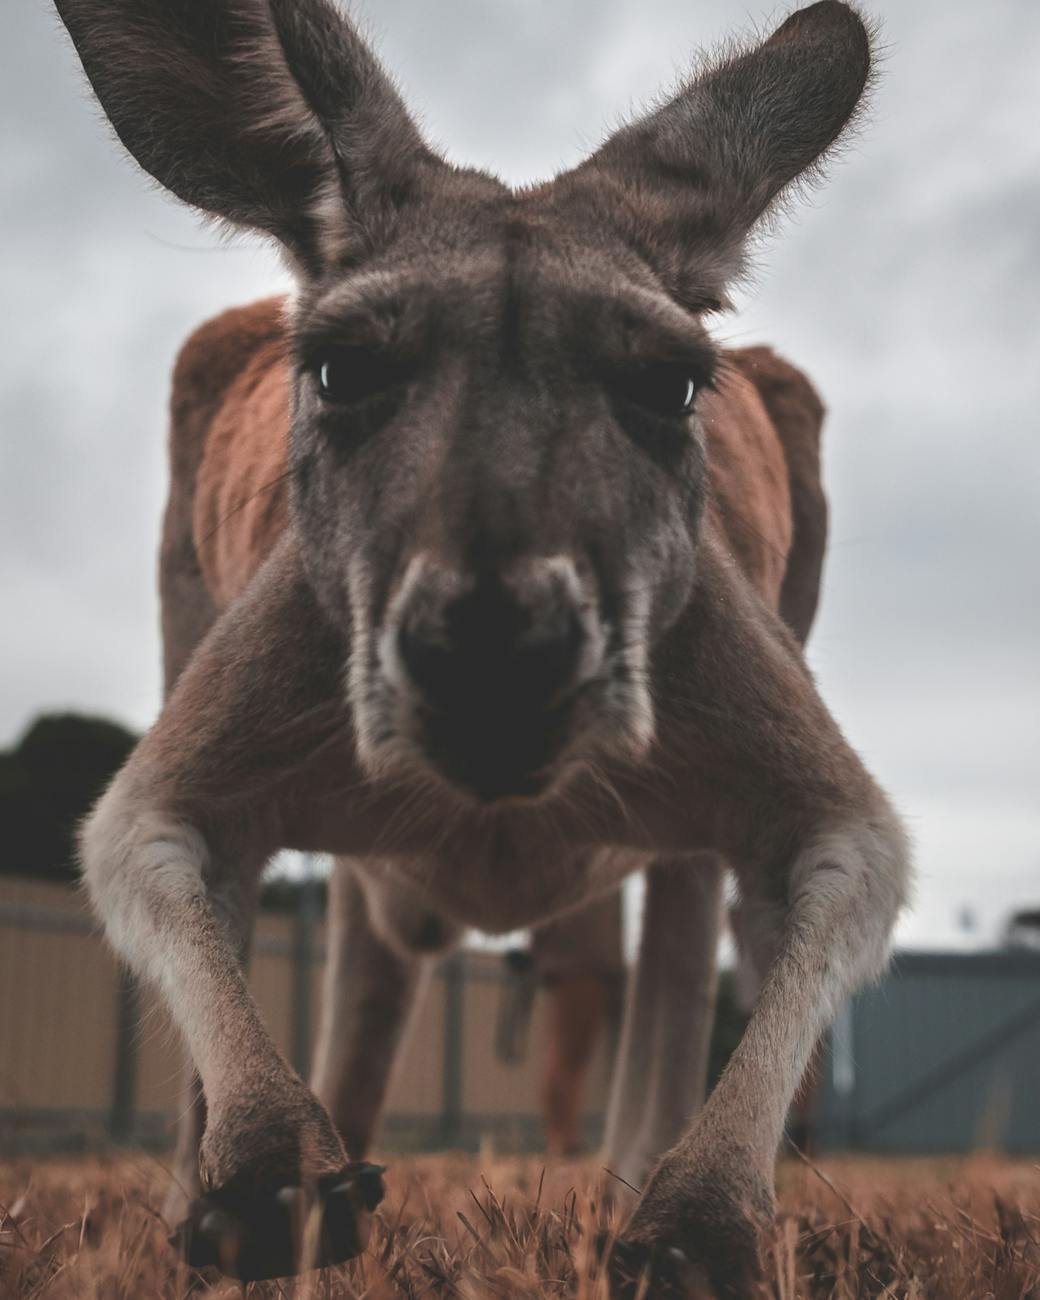 kangaroo on grassy ground in zoo